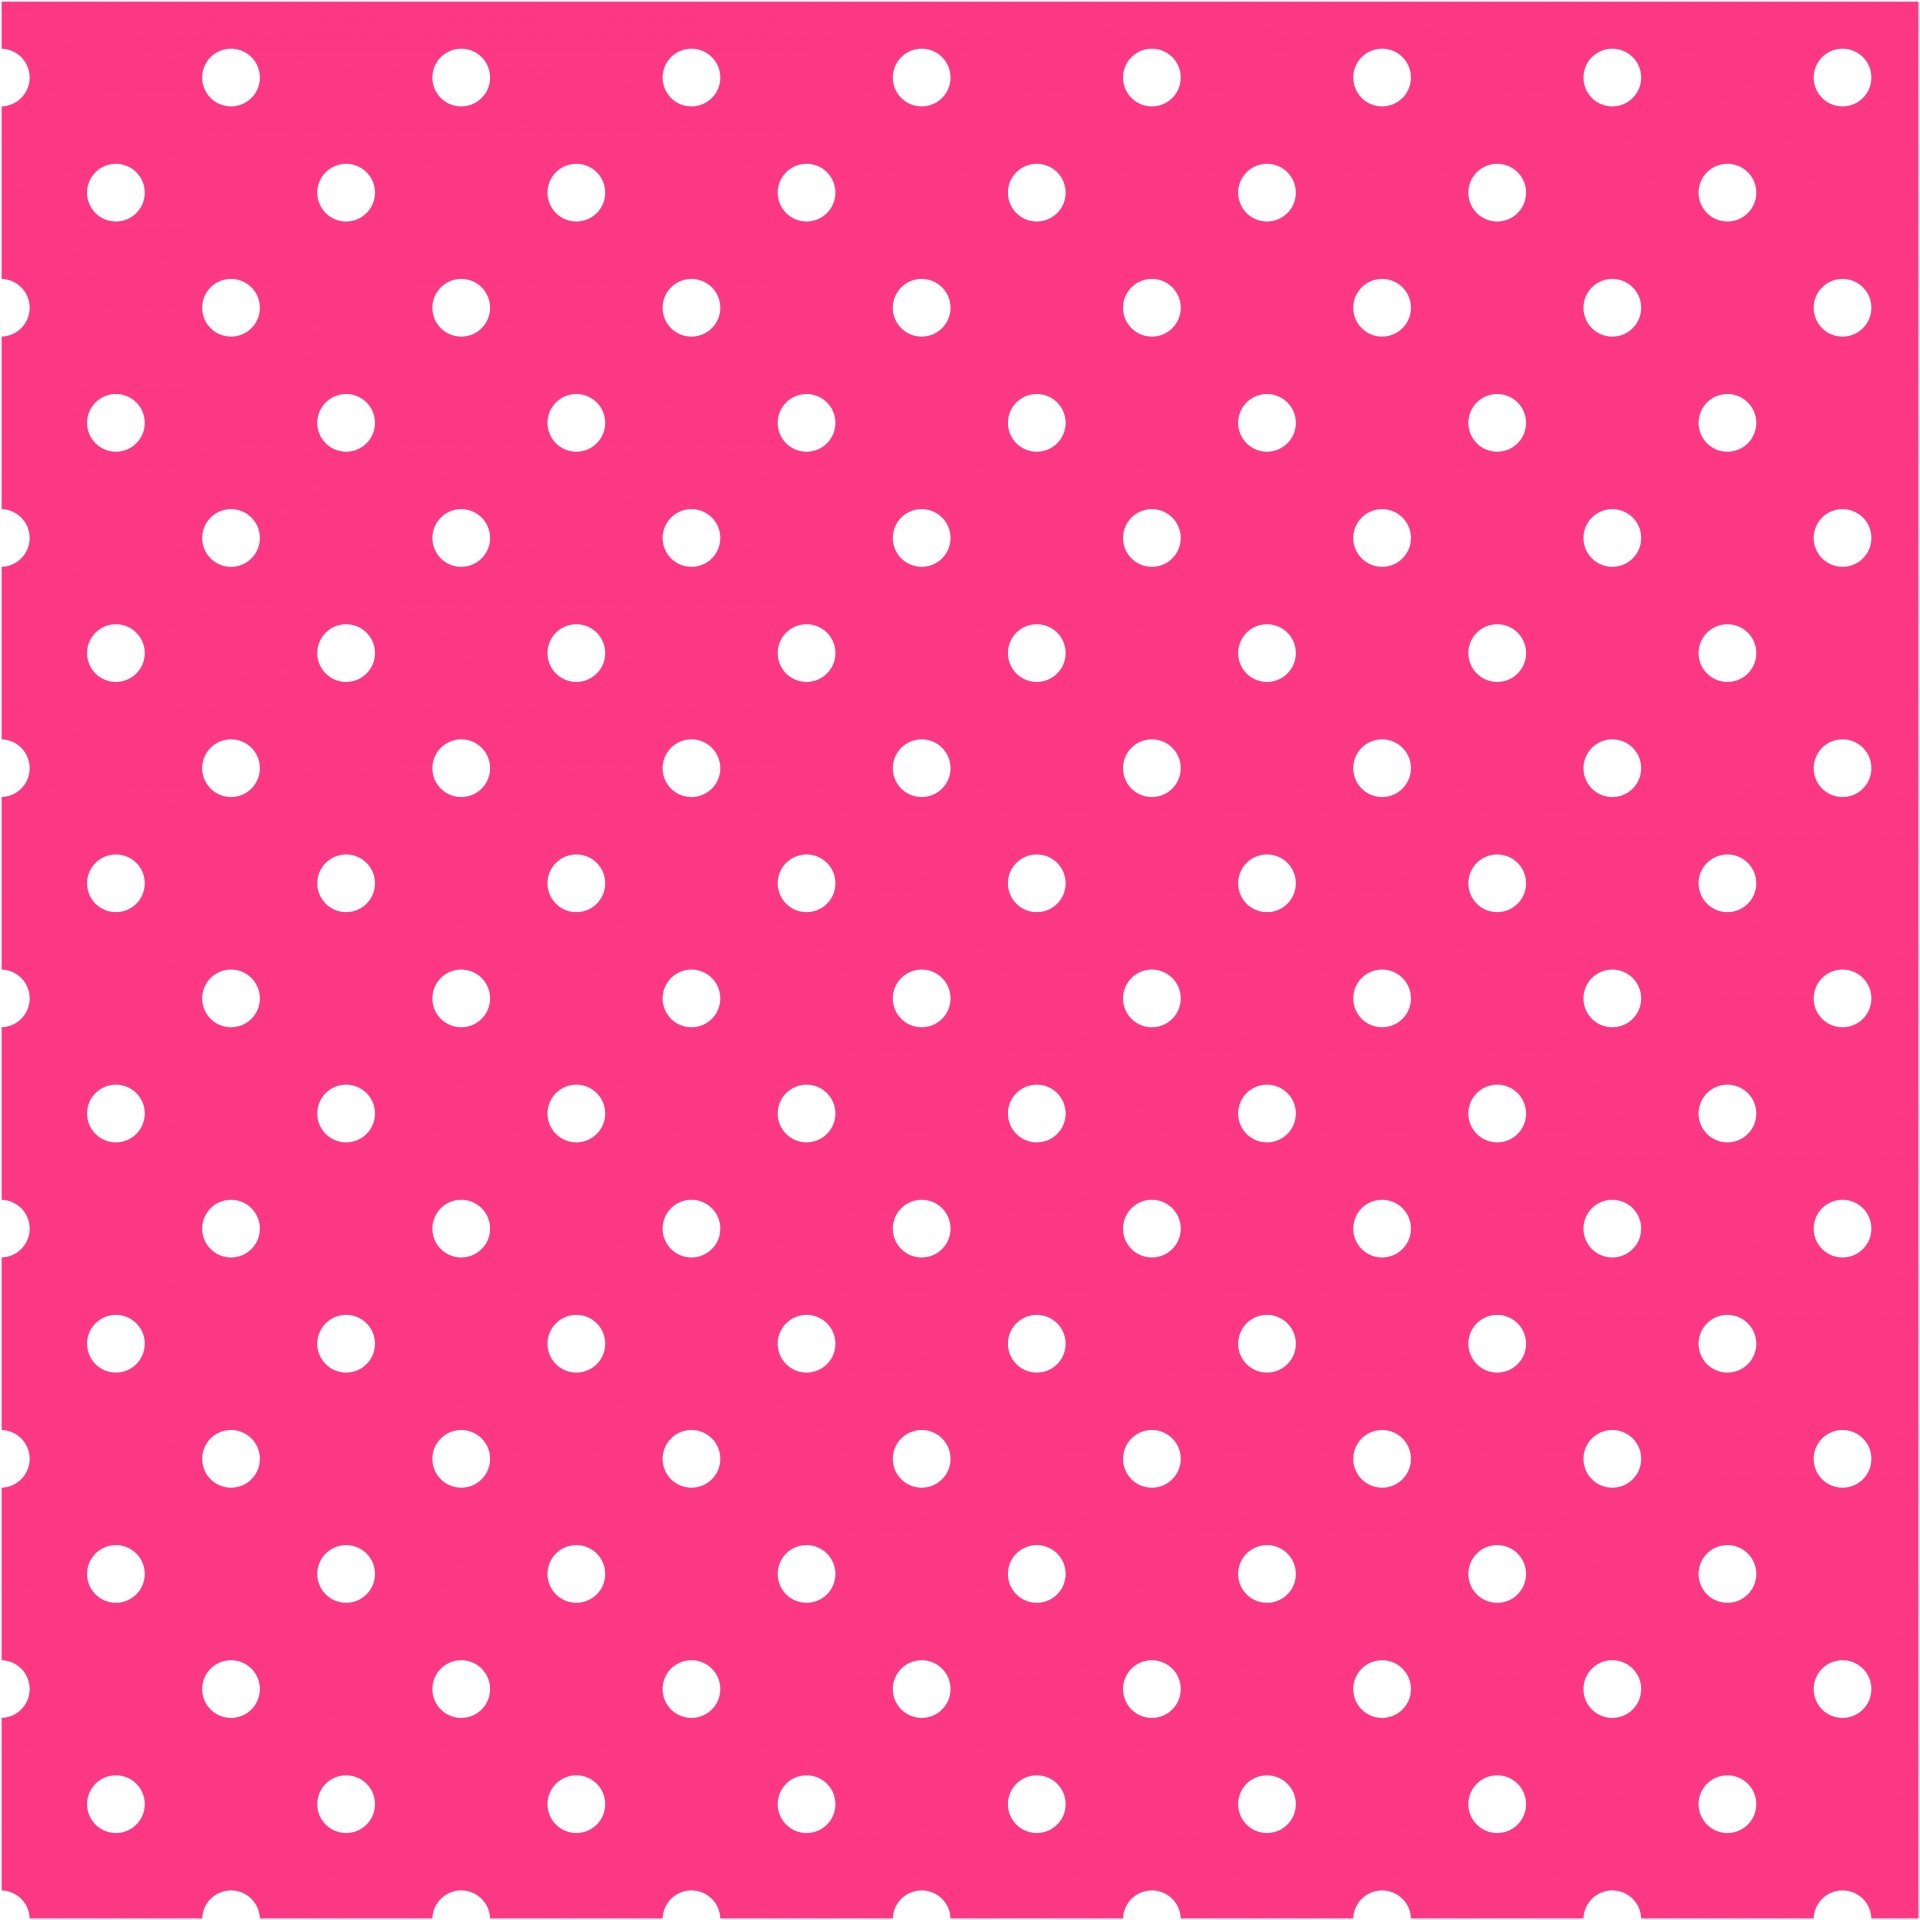 1920x1920 Hot Pink Polka Dot Background